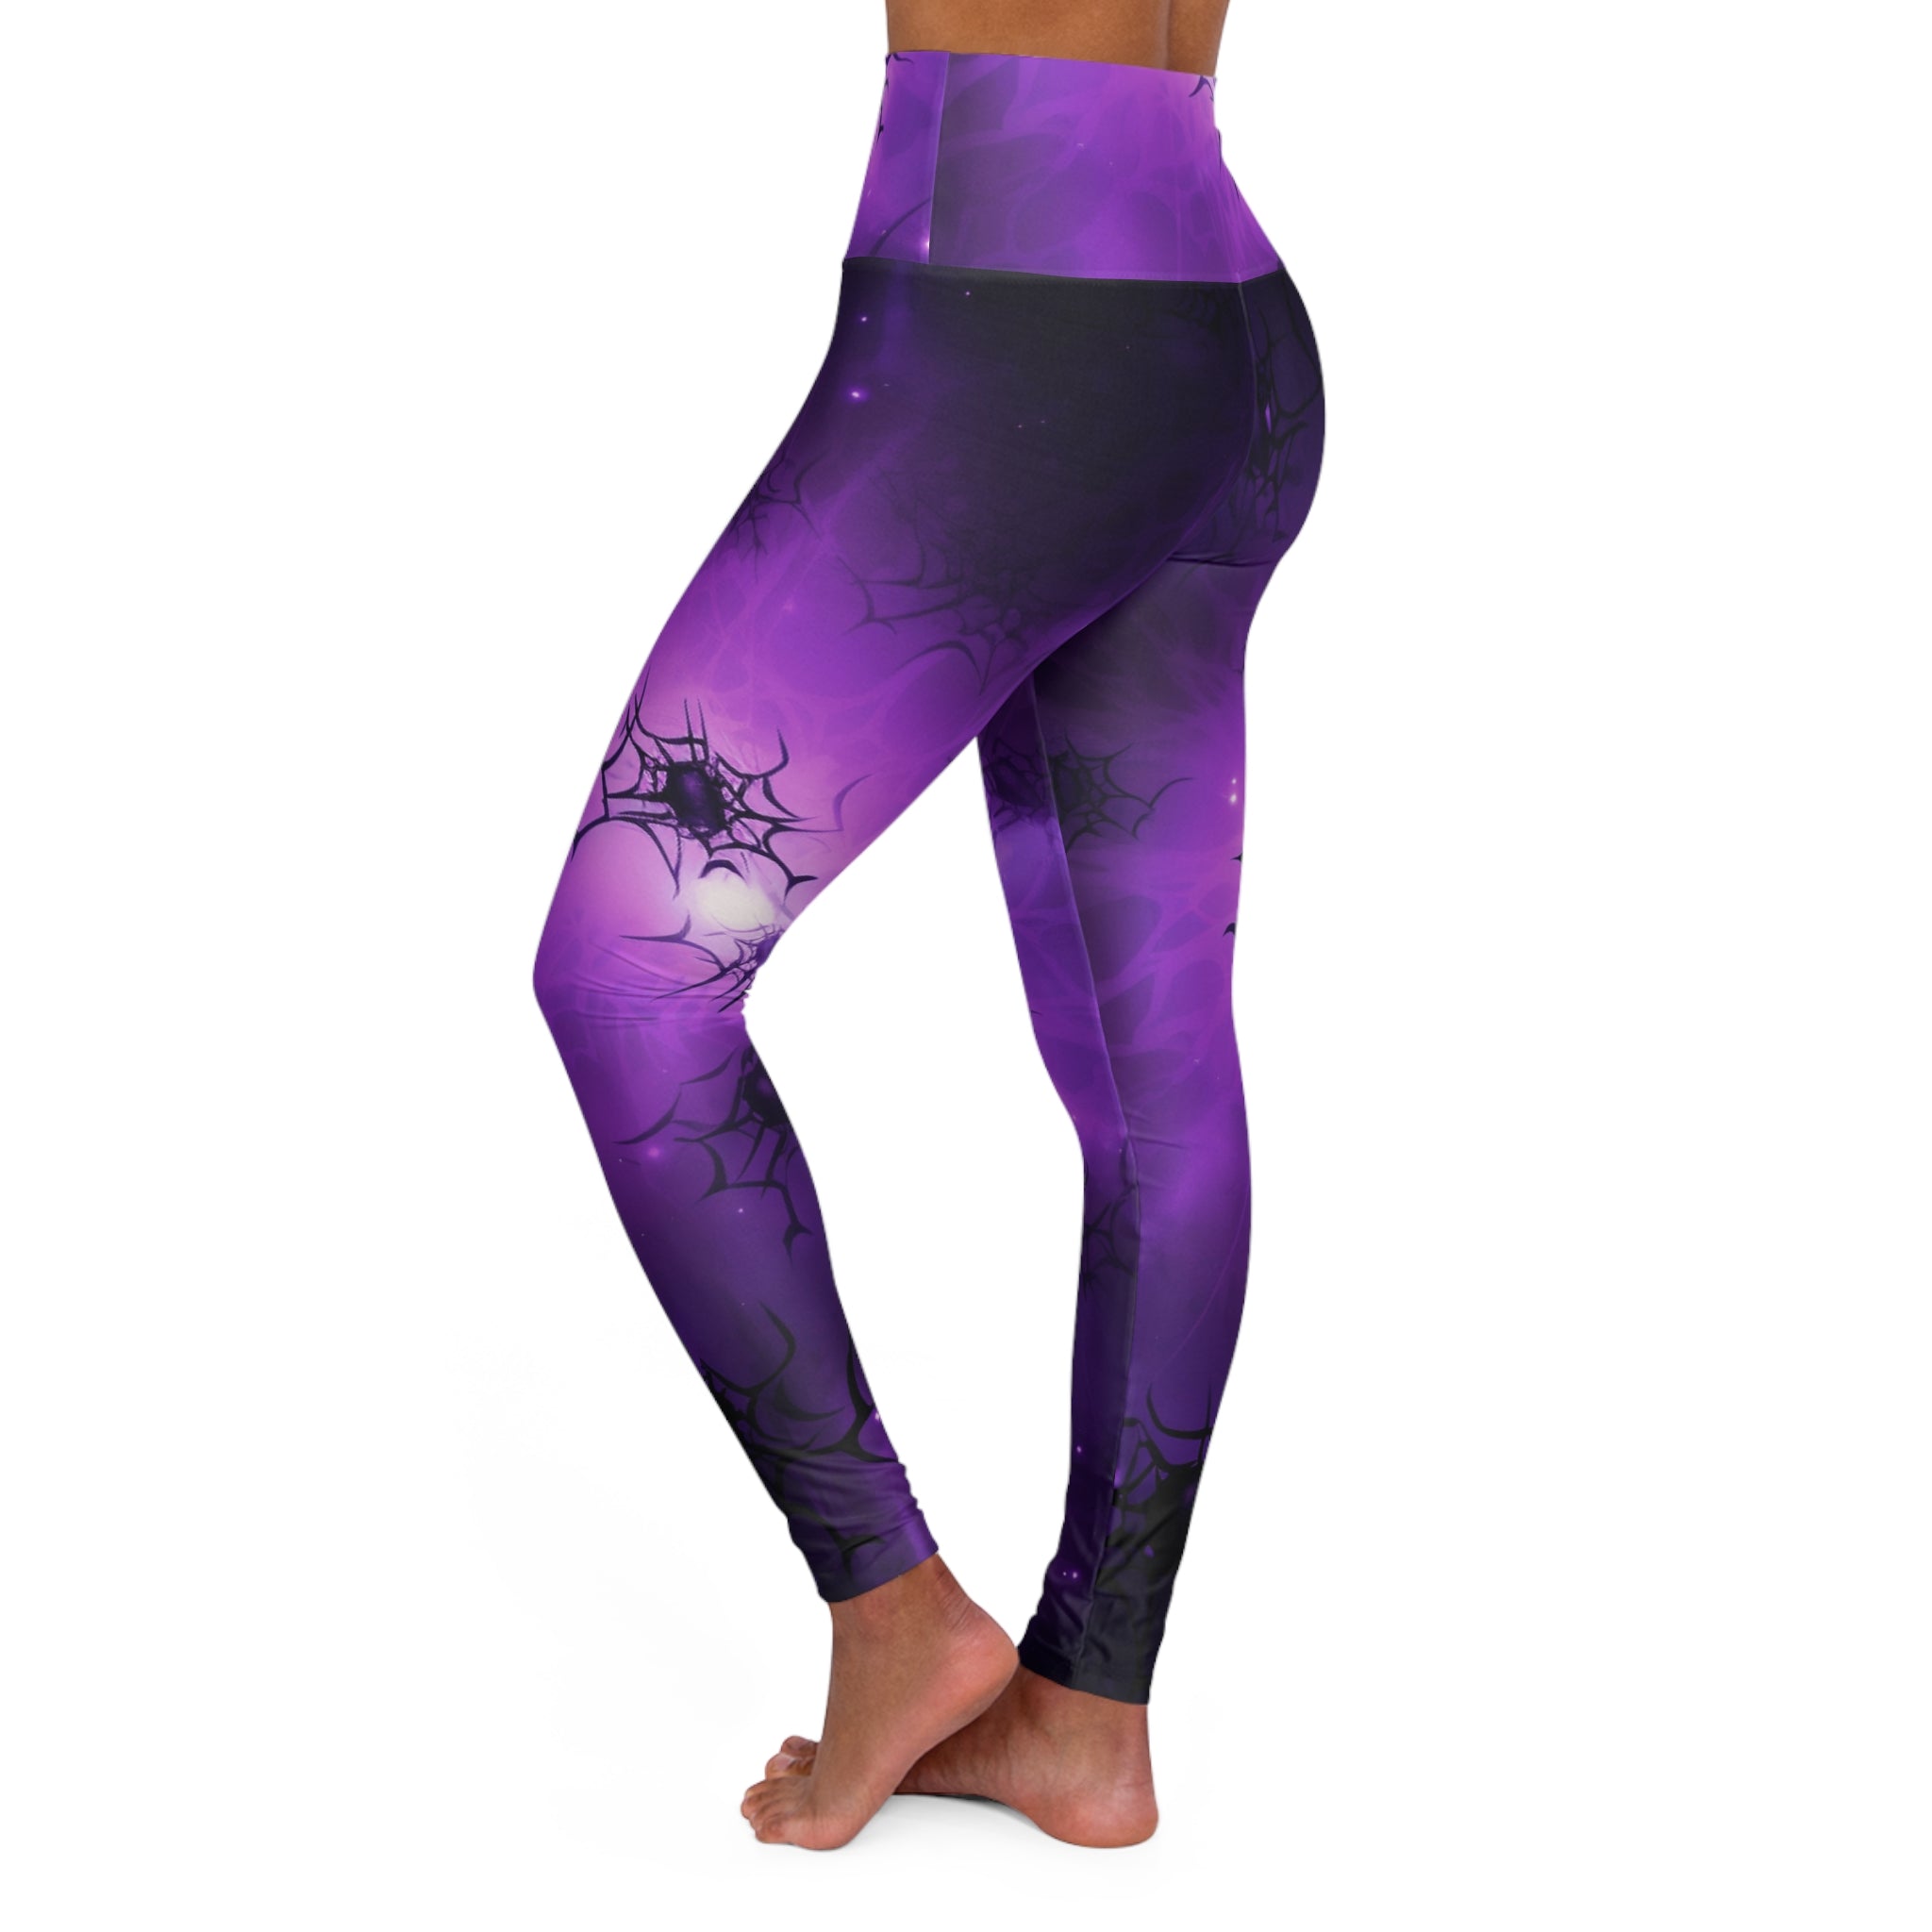 Purple Spider Web Gym Leggings for Women S-2XL - Unique & Supportive